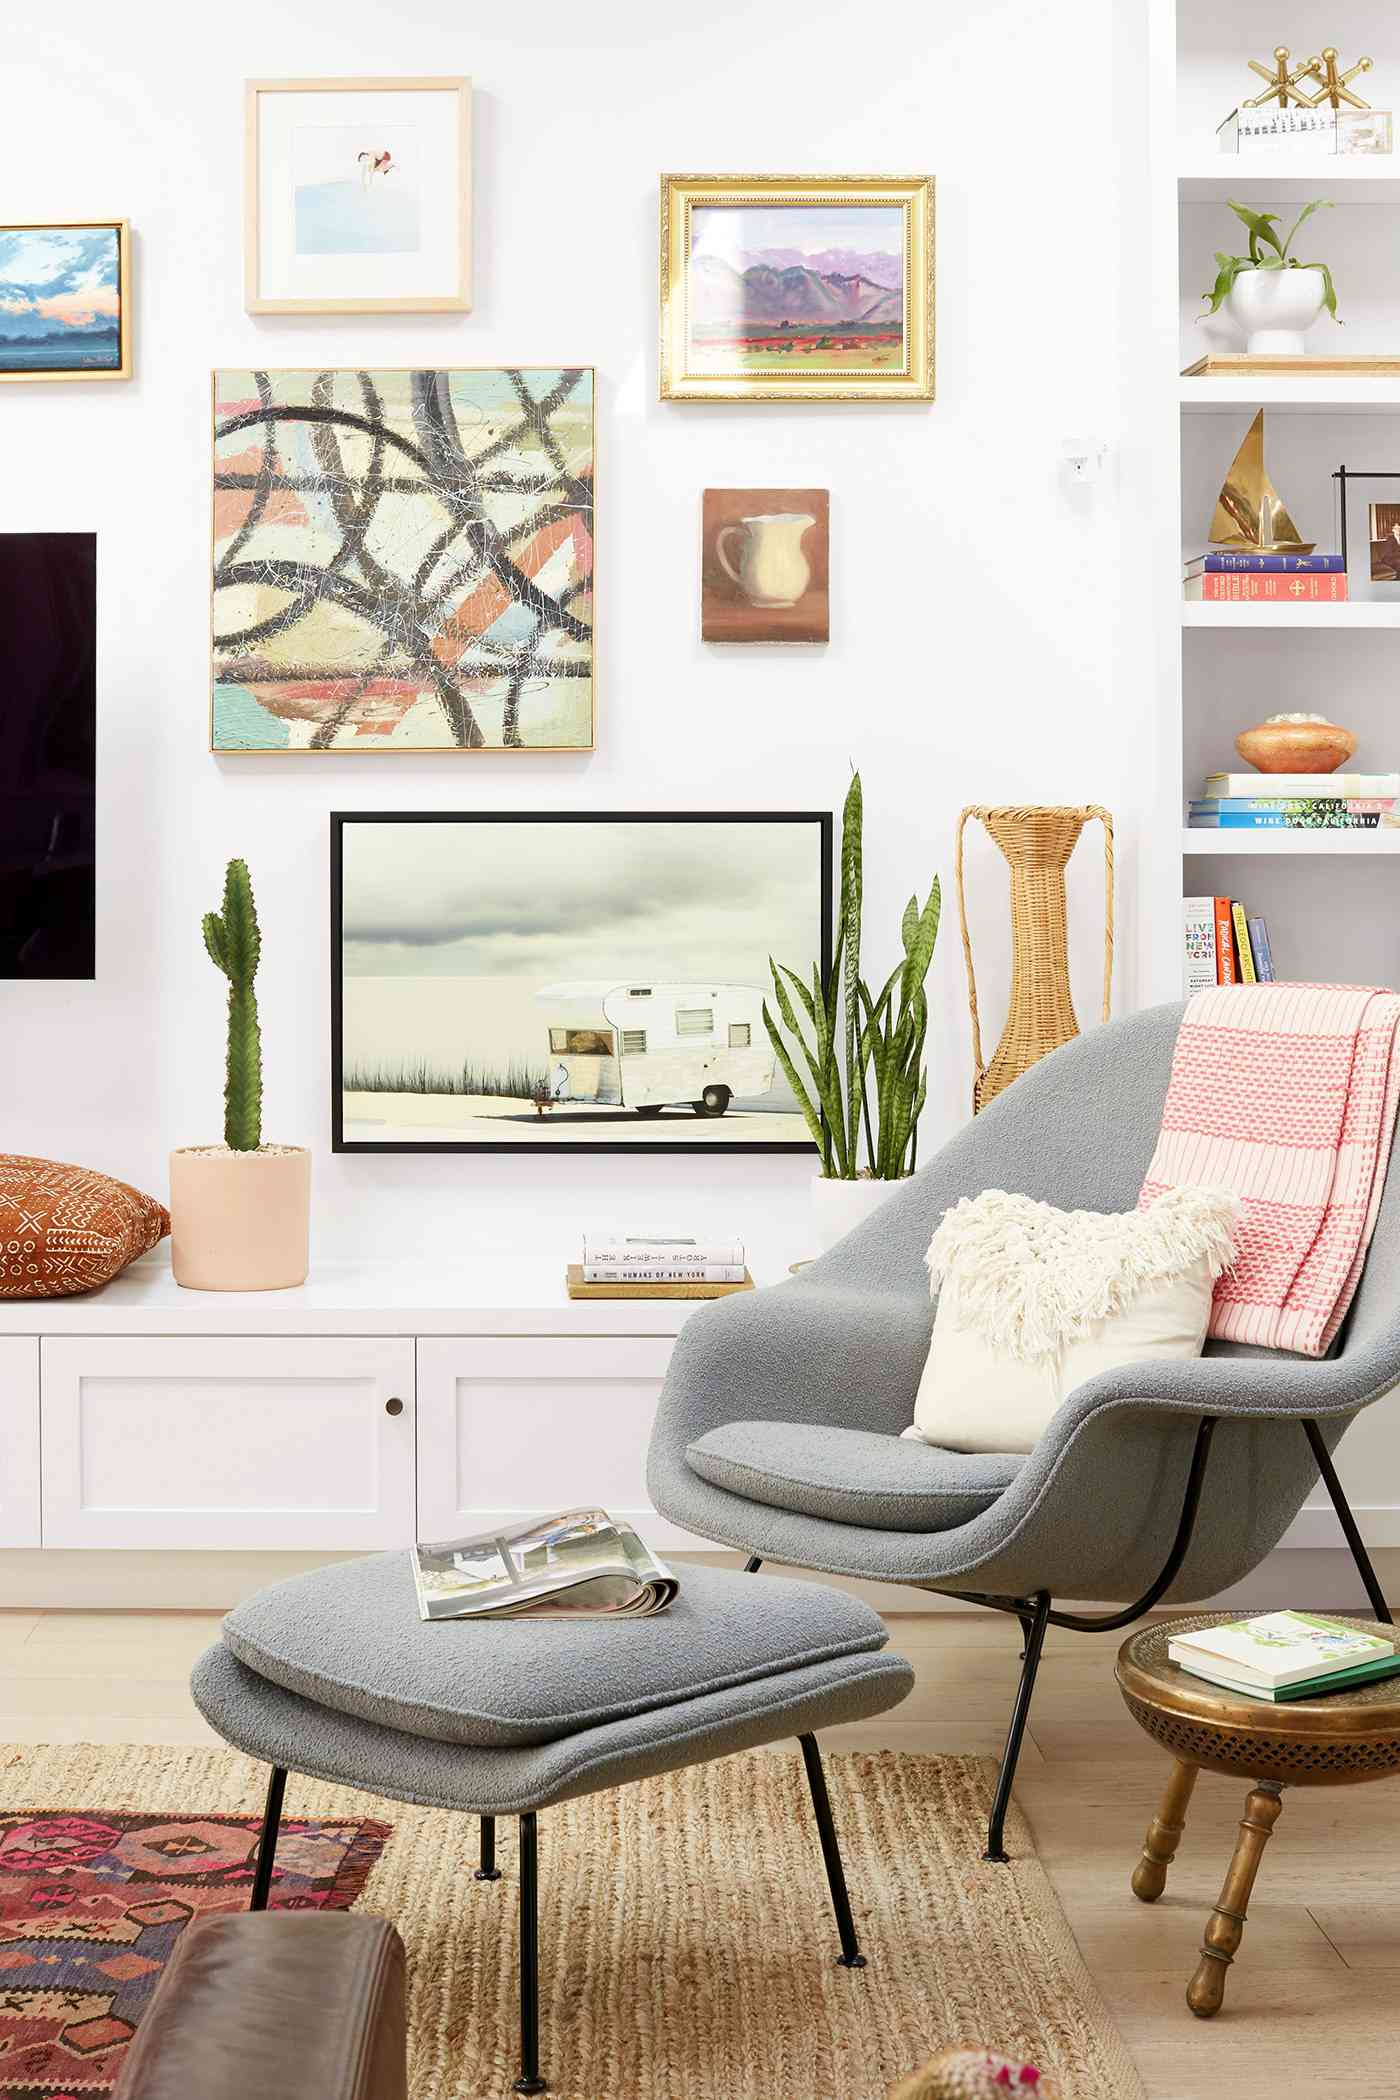 Simple Modern Landscape Canvas Painting Wall Art Room Bedroom Home Decor Littl 